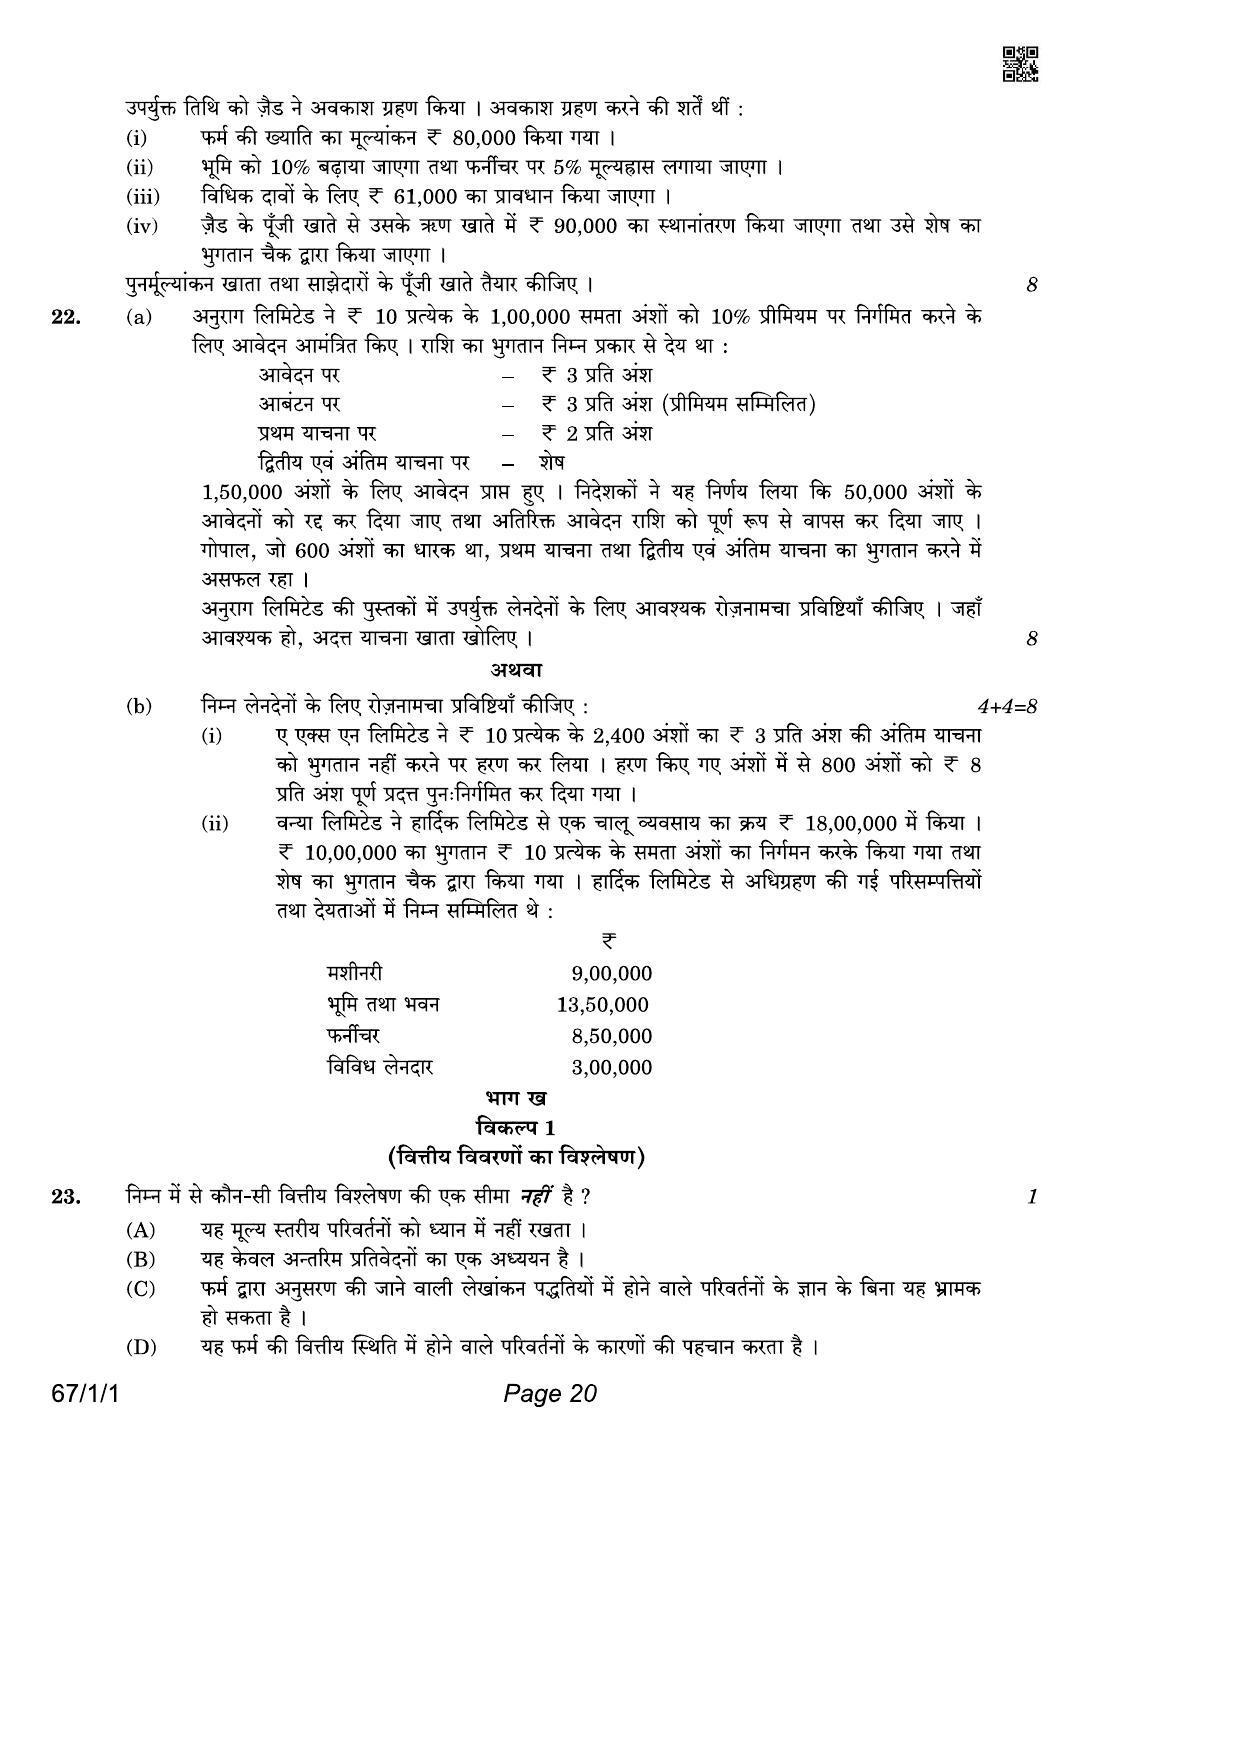 CBSE Class 12 QP_055_Accountancy 2021 Compartment Question Paper - Page 20